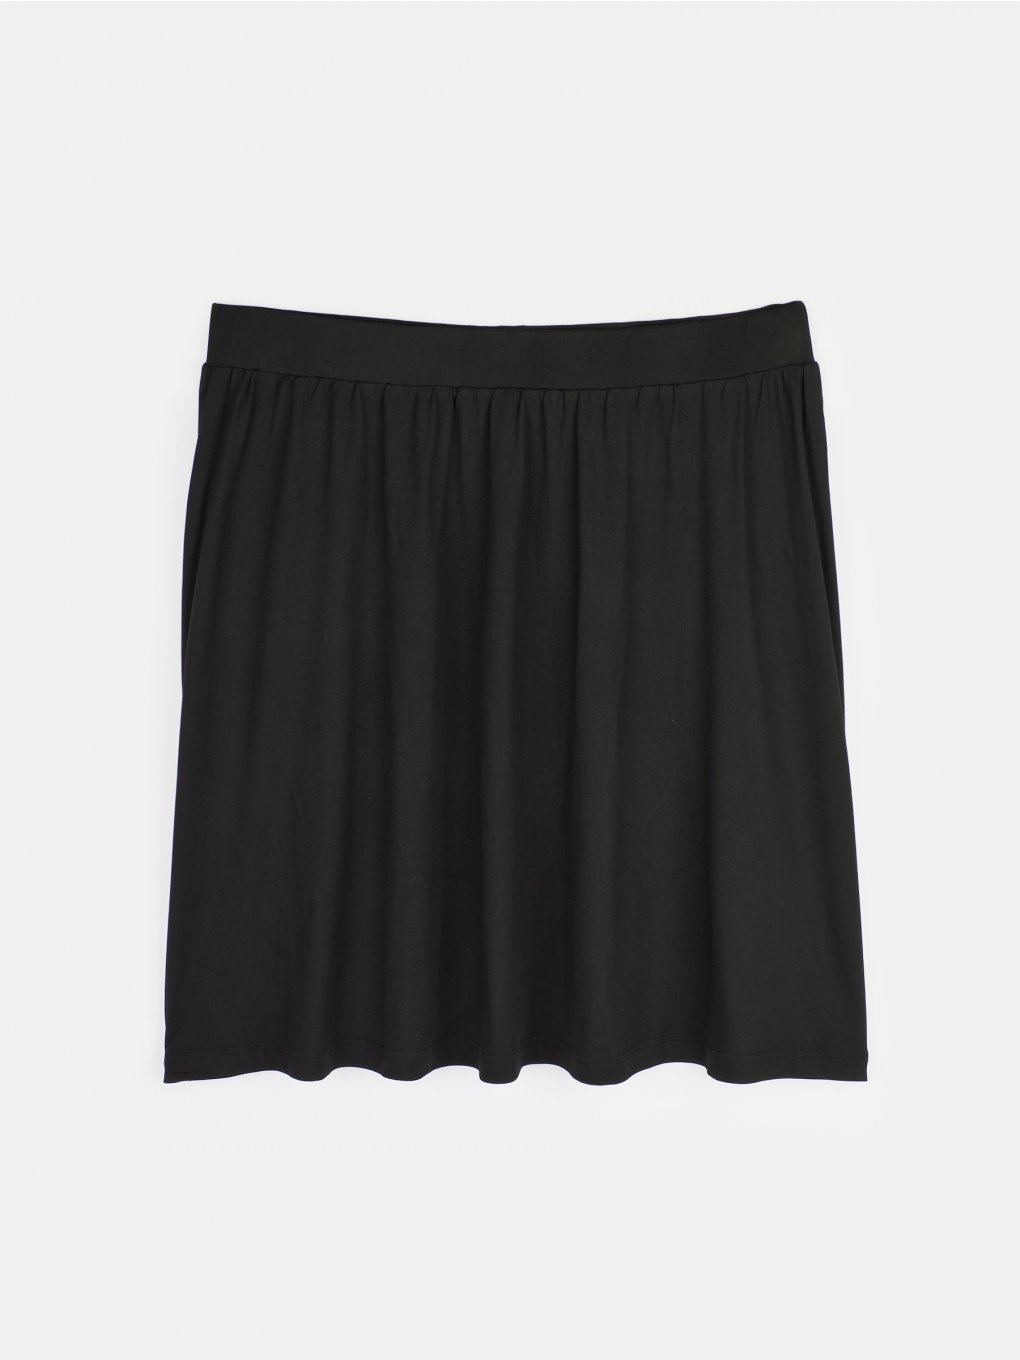 Plus size a-line skirt